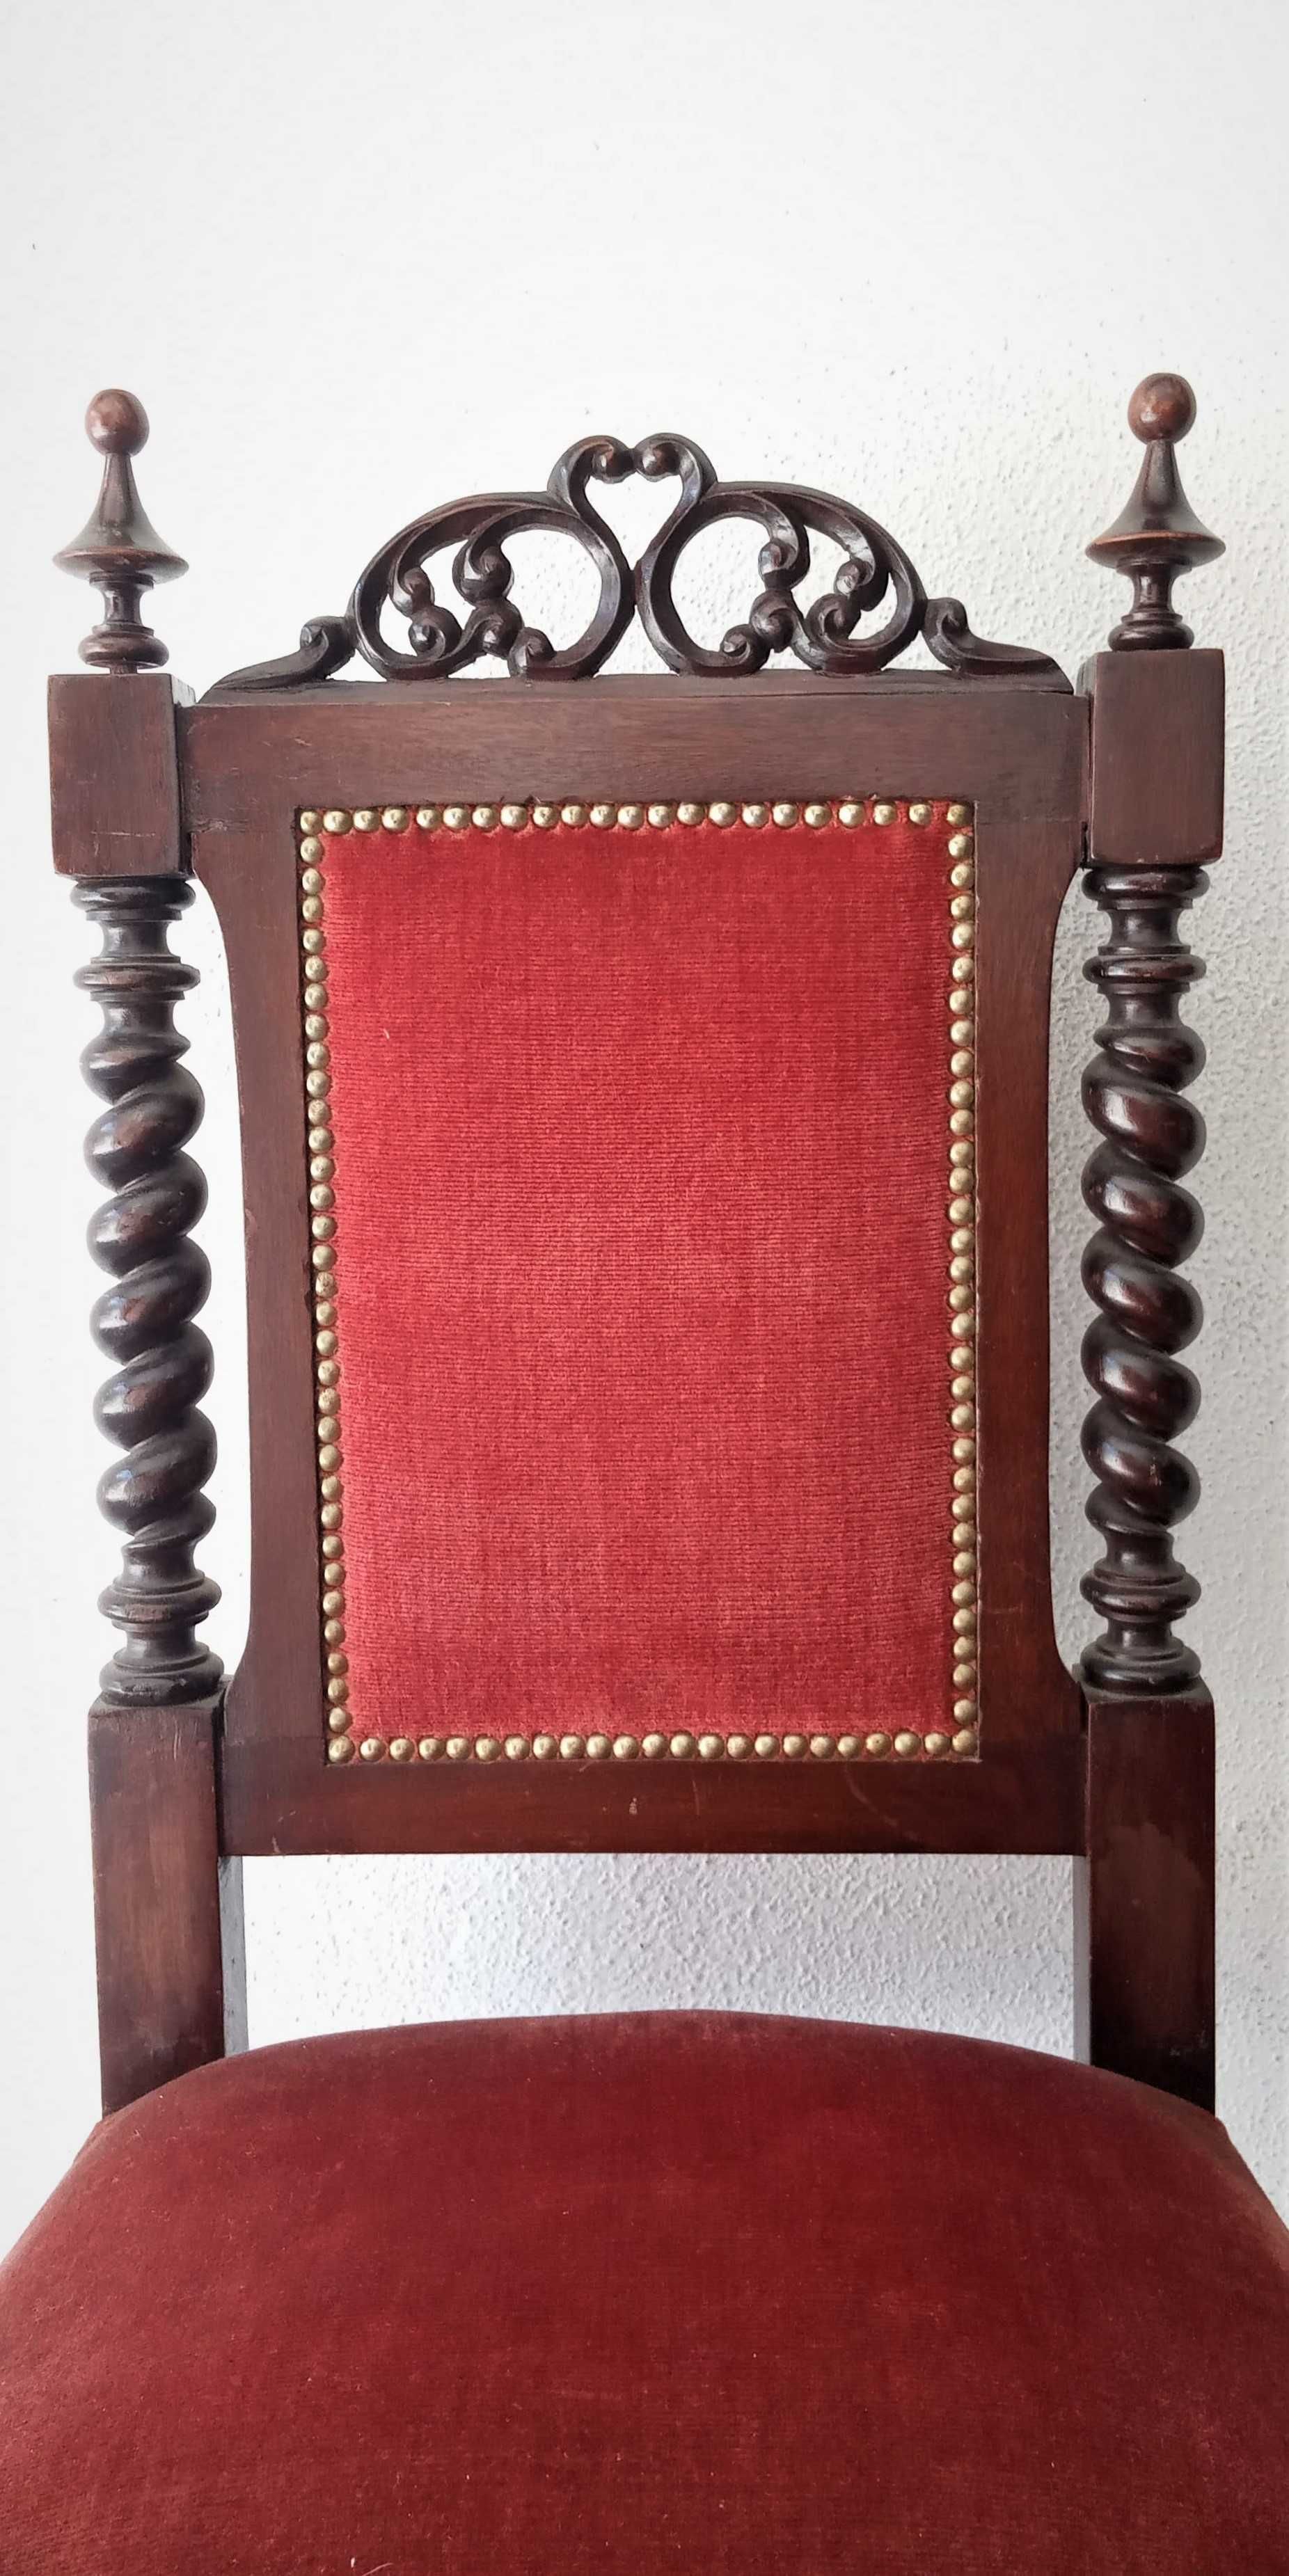 Cadeiras de madeira entalhada, veludo pregado a tachas